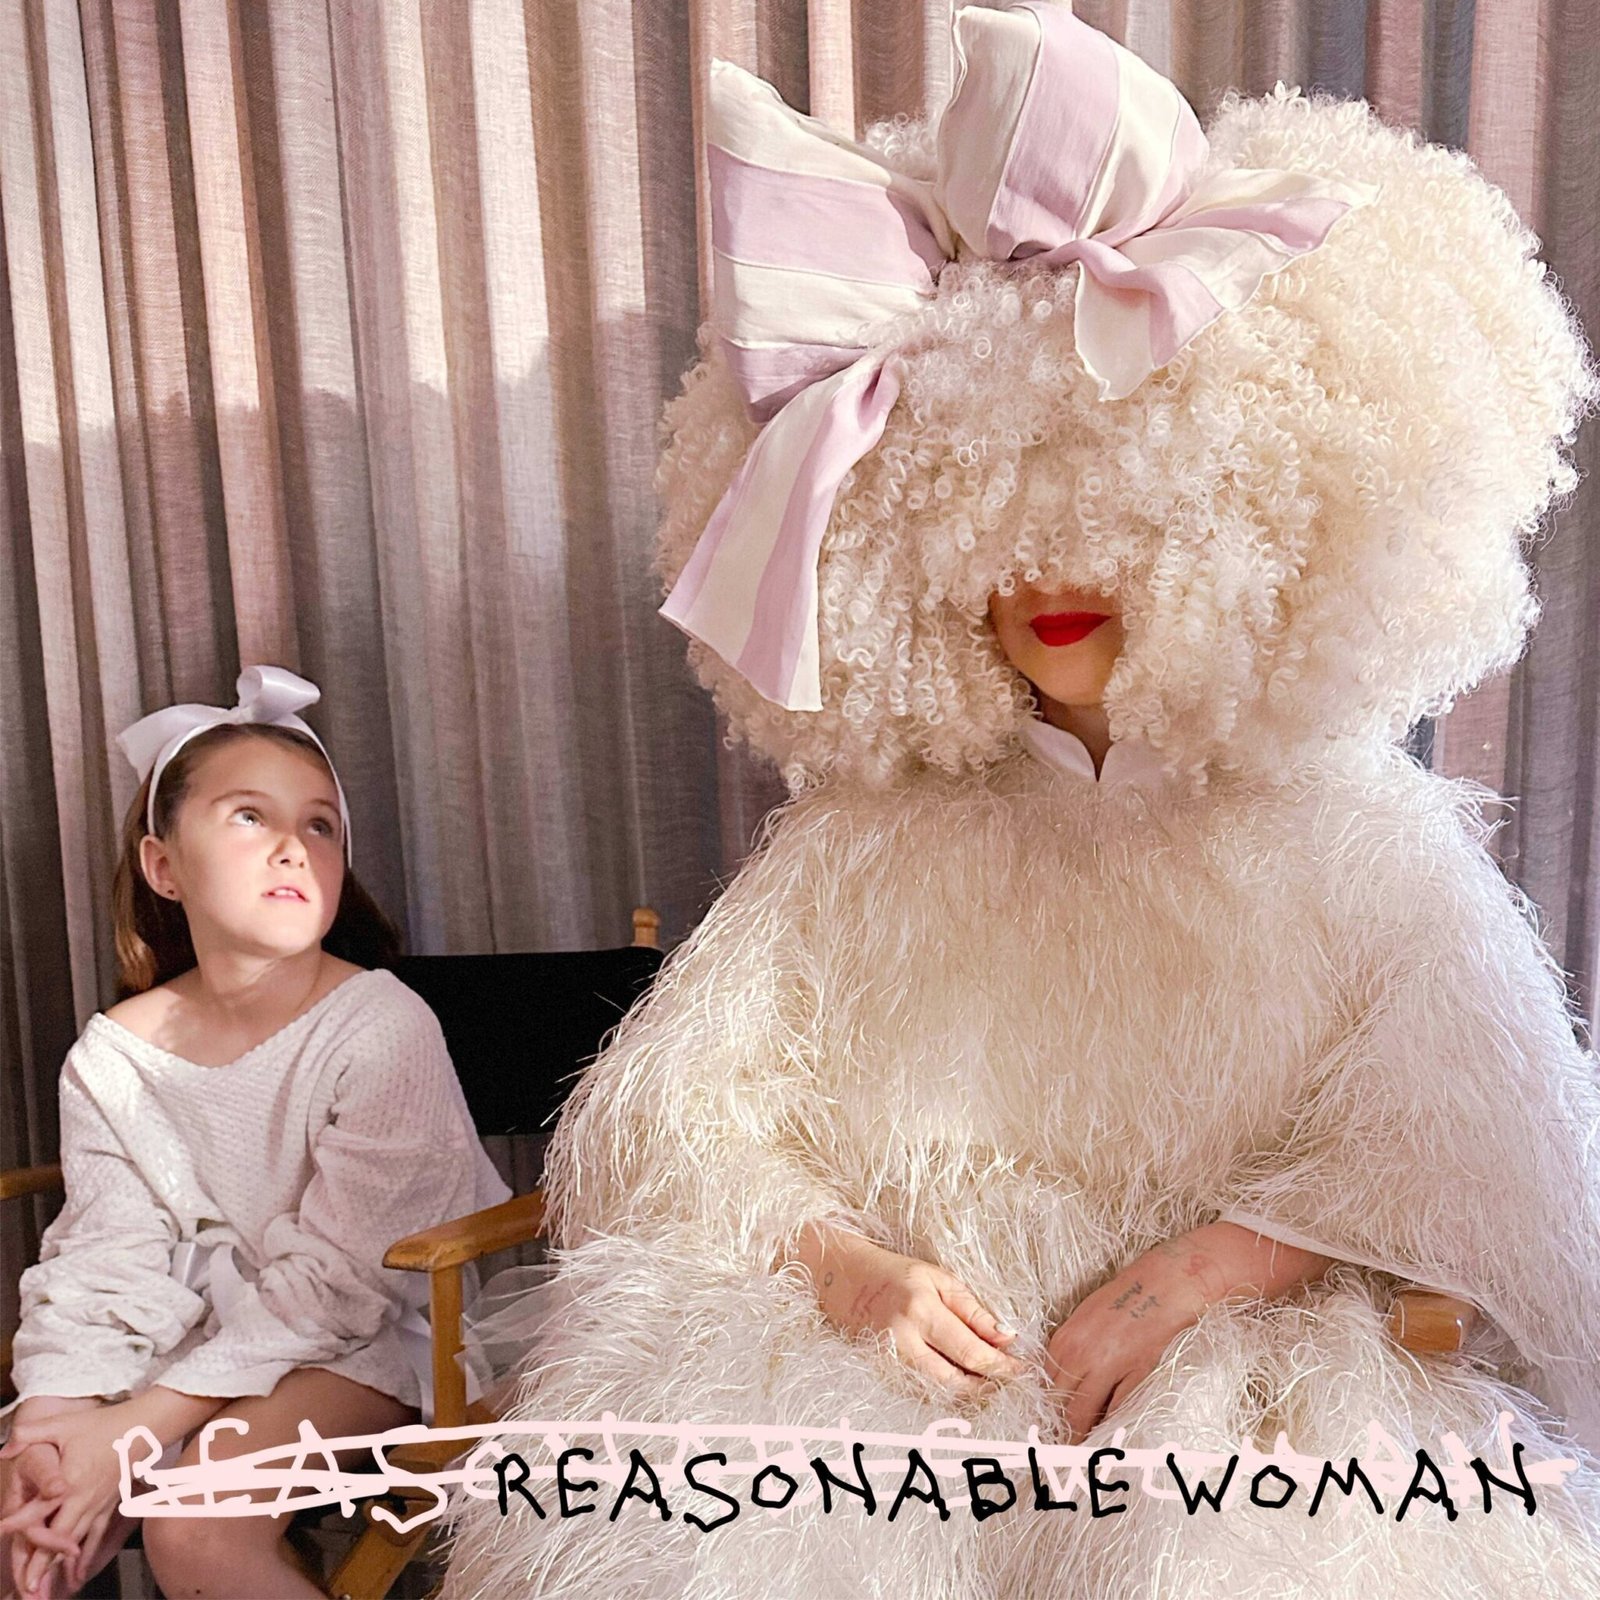 Sia lanca aguardado album Reasonable Woman scaled POP CYBER